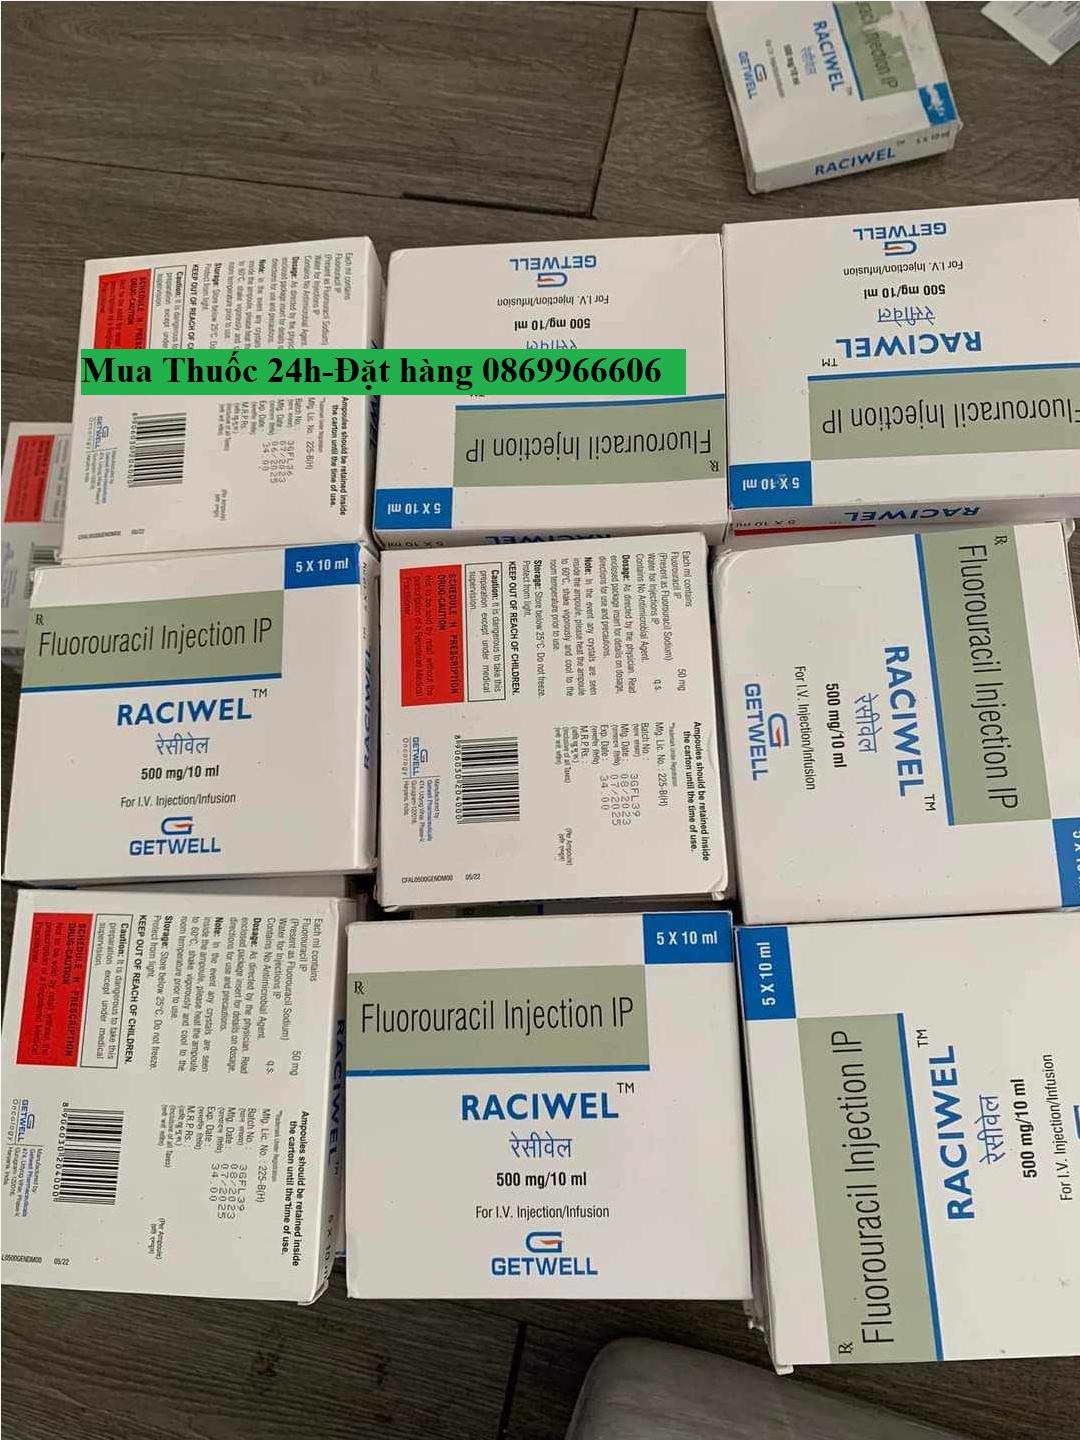 Thuốc Raciwel Fluorouracil giá bao nhiêu mua ở đâu?